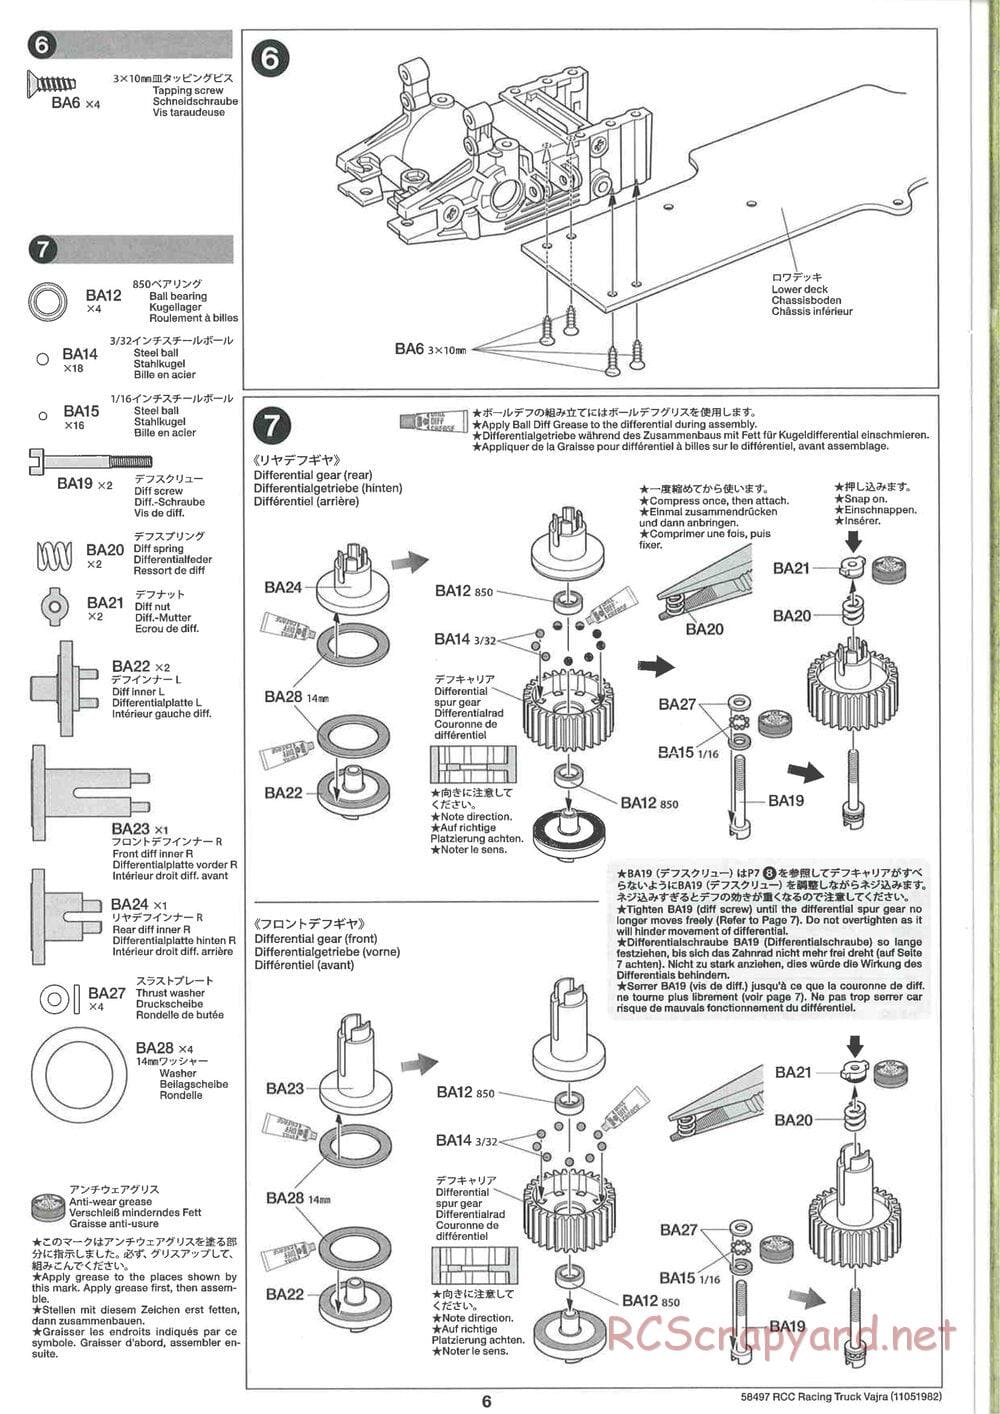 Tamiya - Vajra - AV Chassis - Manual - Page 6